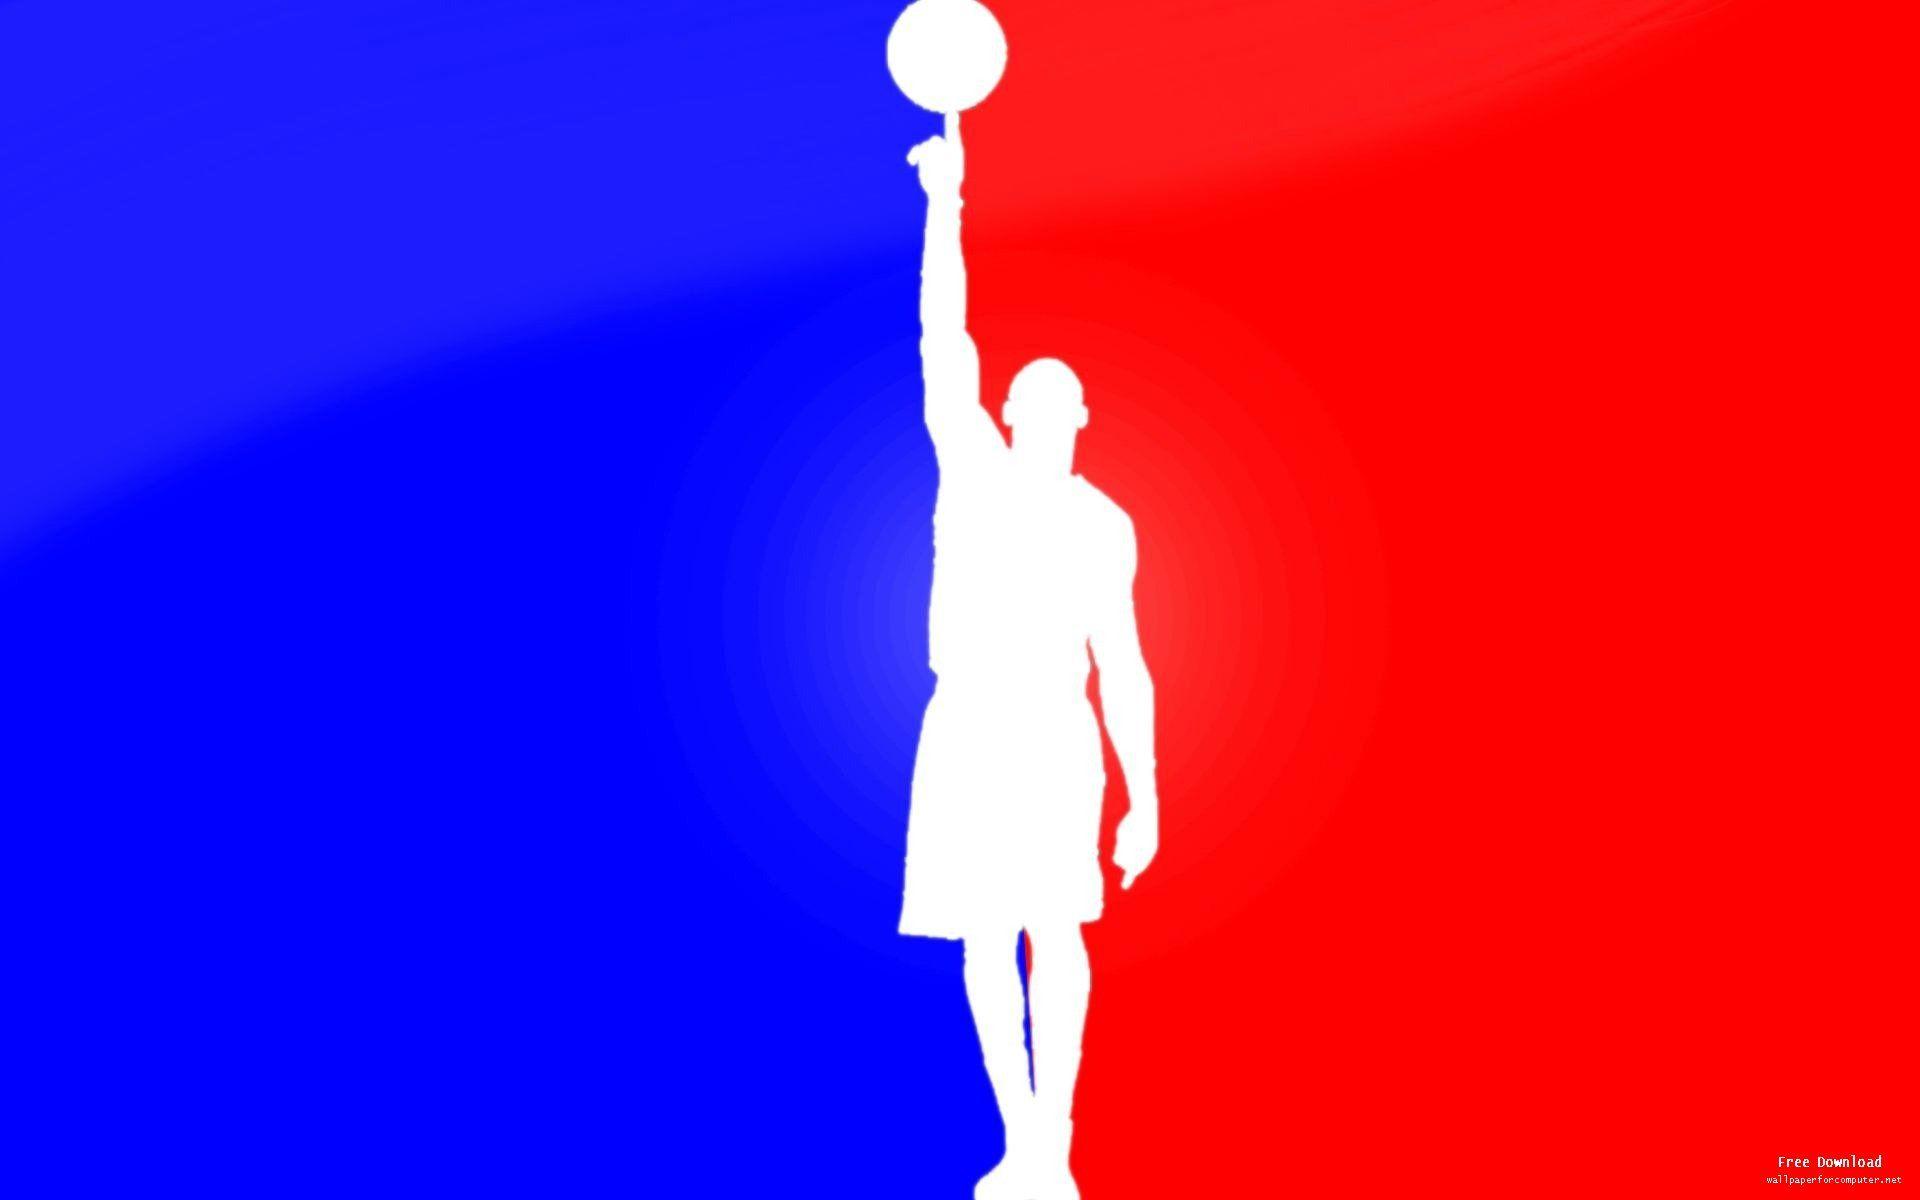 Golden State NBA Logos Wallpaper Free wallpaper download 1920x1200